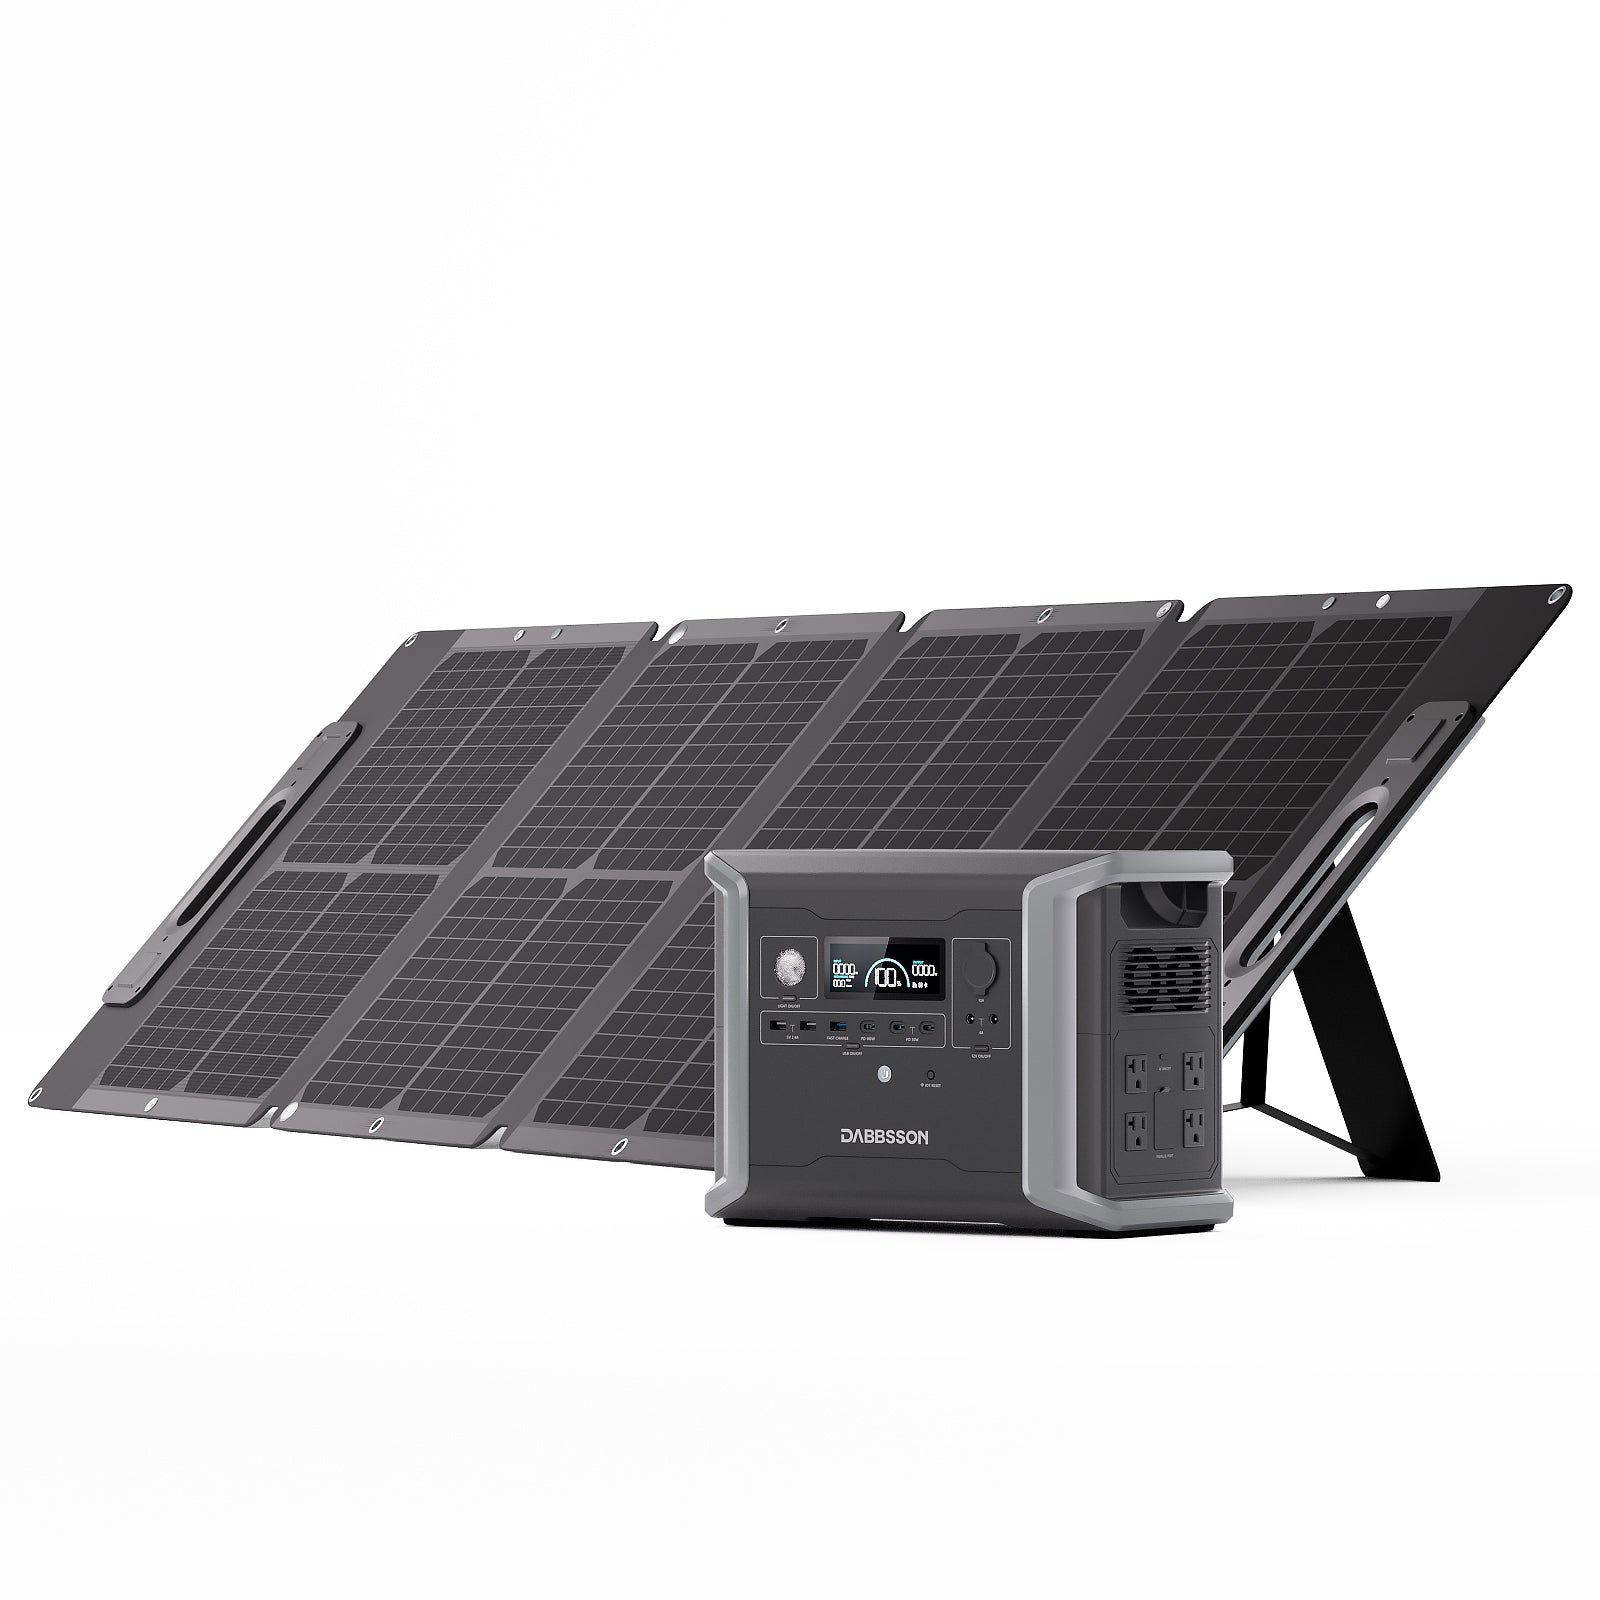 Dabbsson DBS1300 Solar Generator - 1330Wh | 1200W